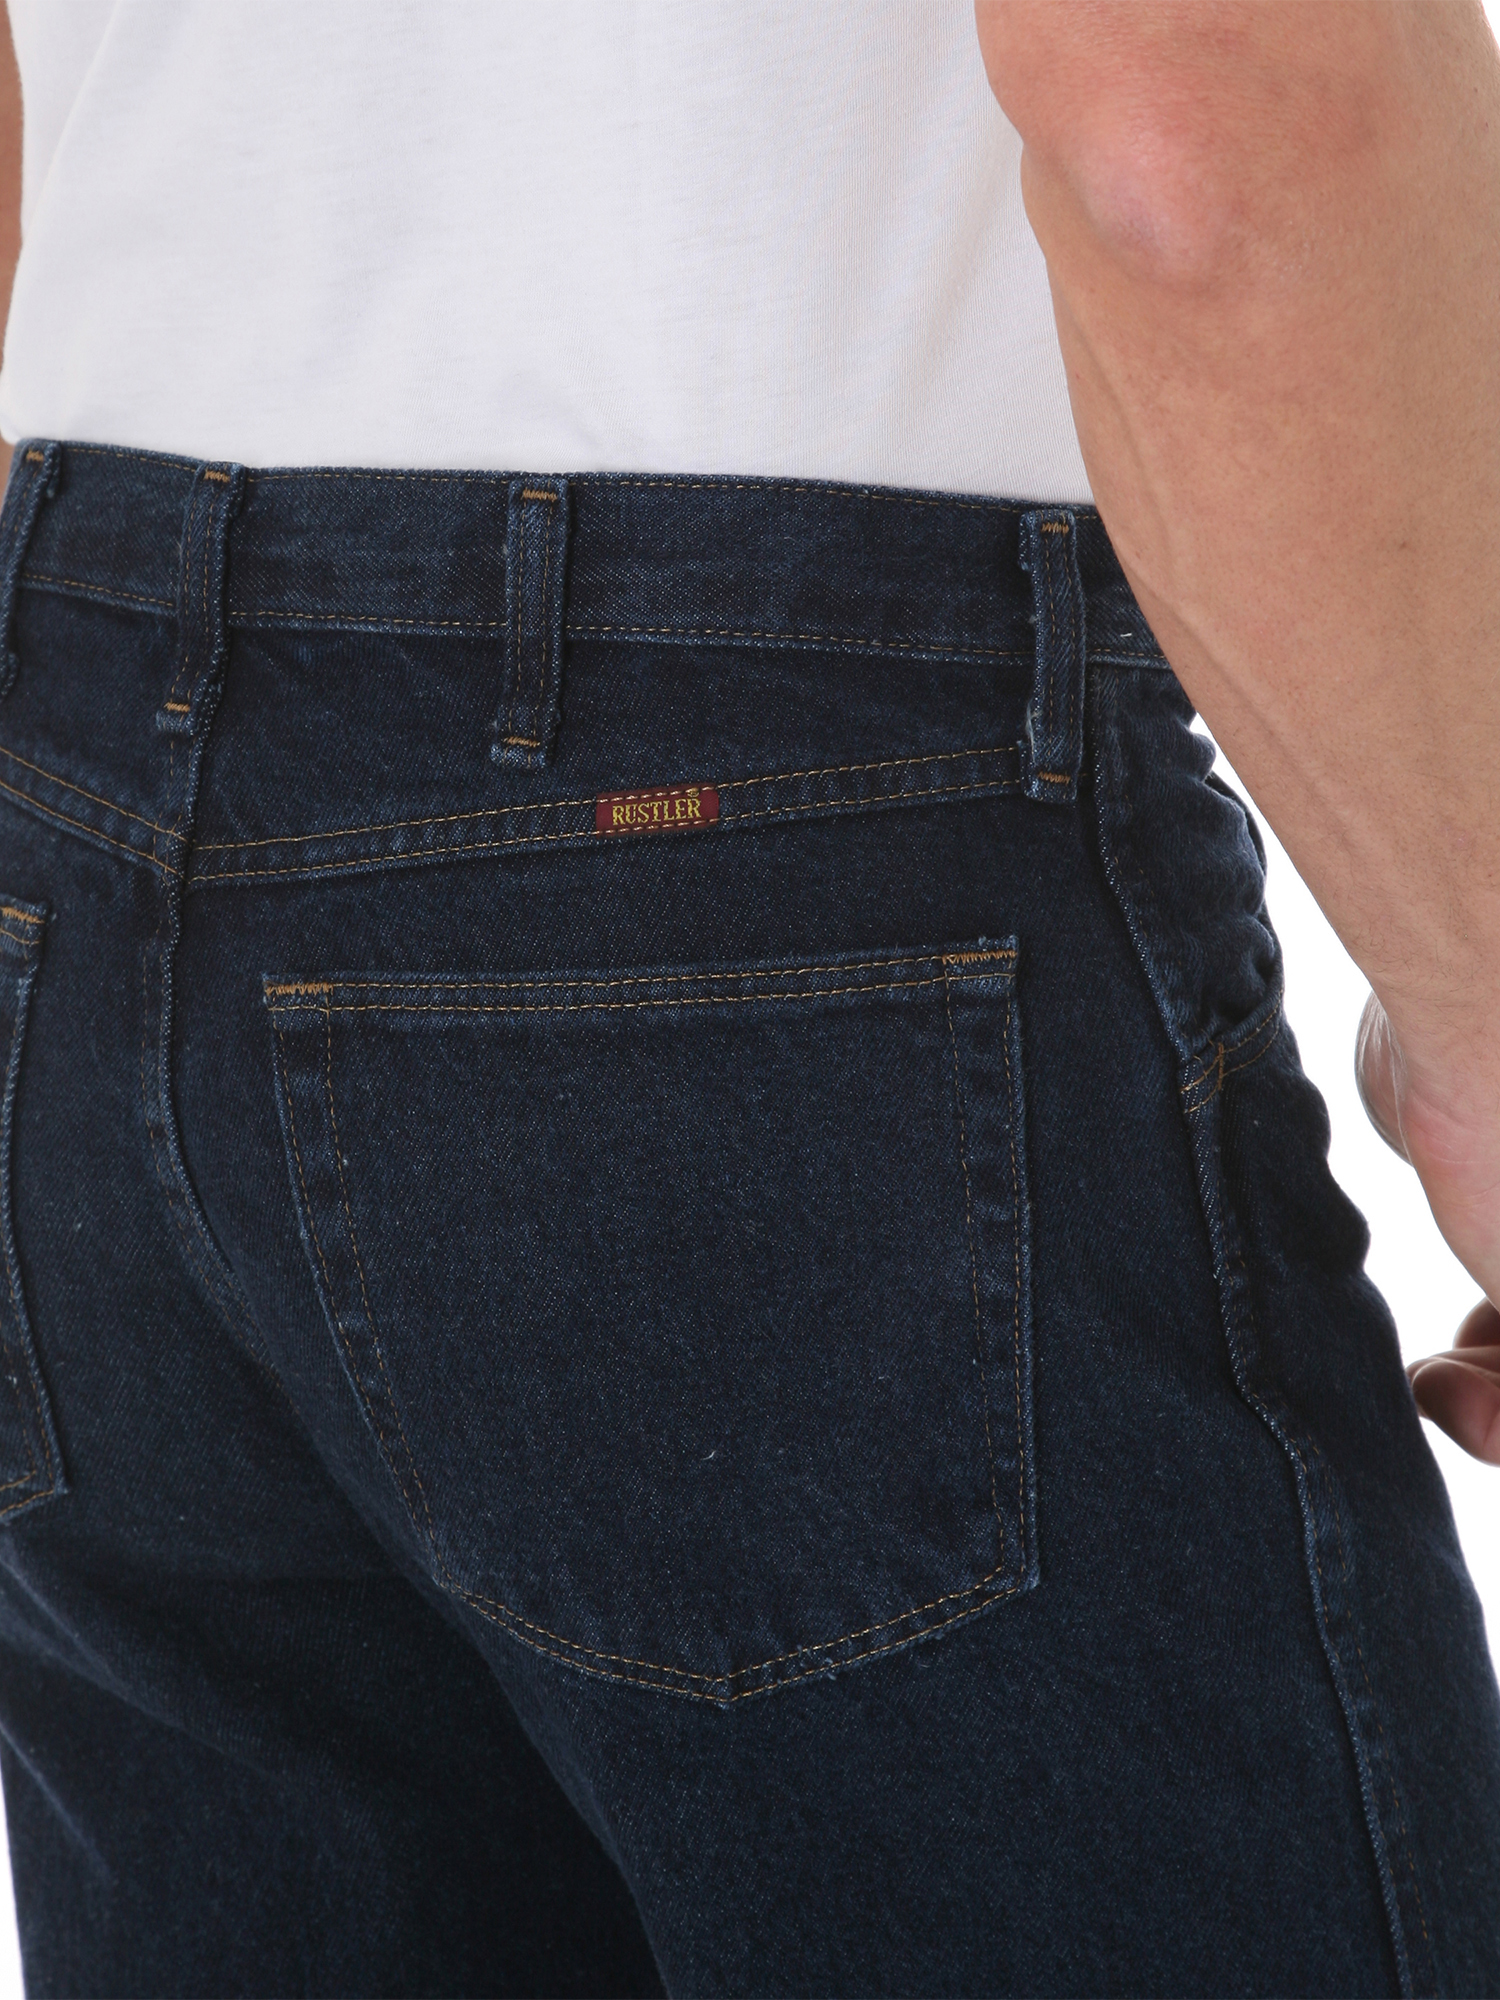 Wrangler Rustler Men's and Big Men's Regular Fit Boot Cut Cotton Jeans - image 4 of 5